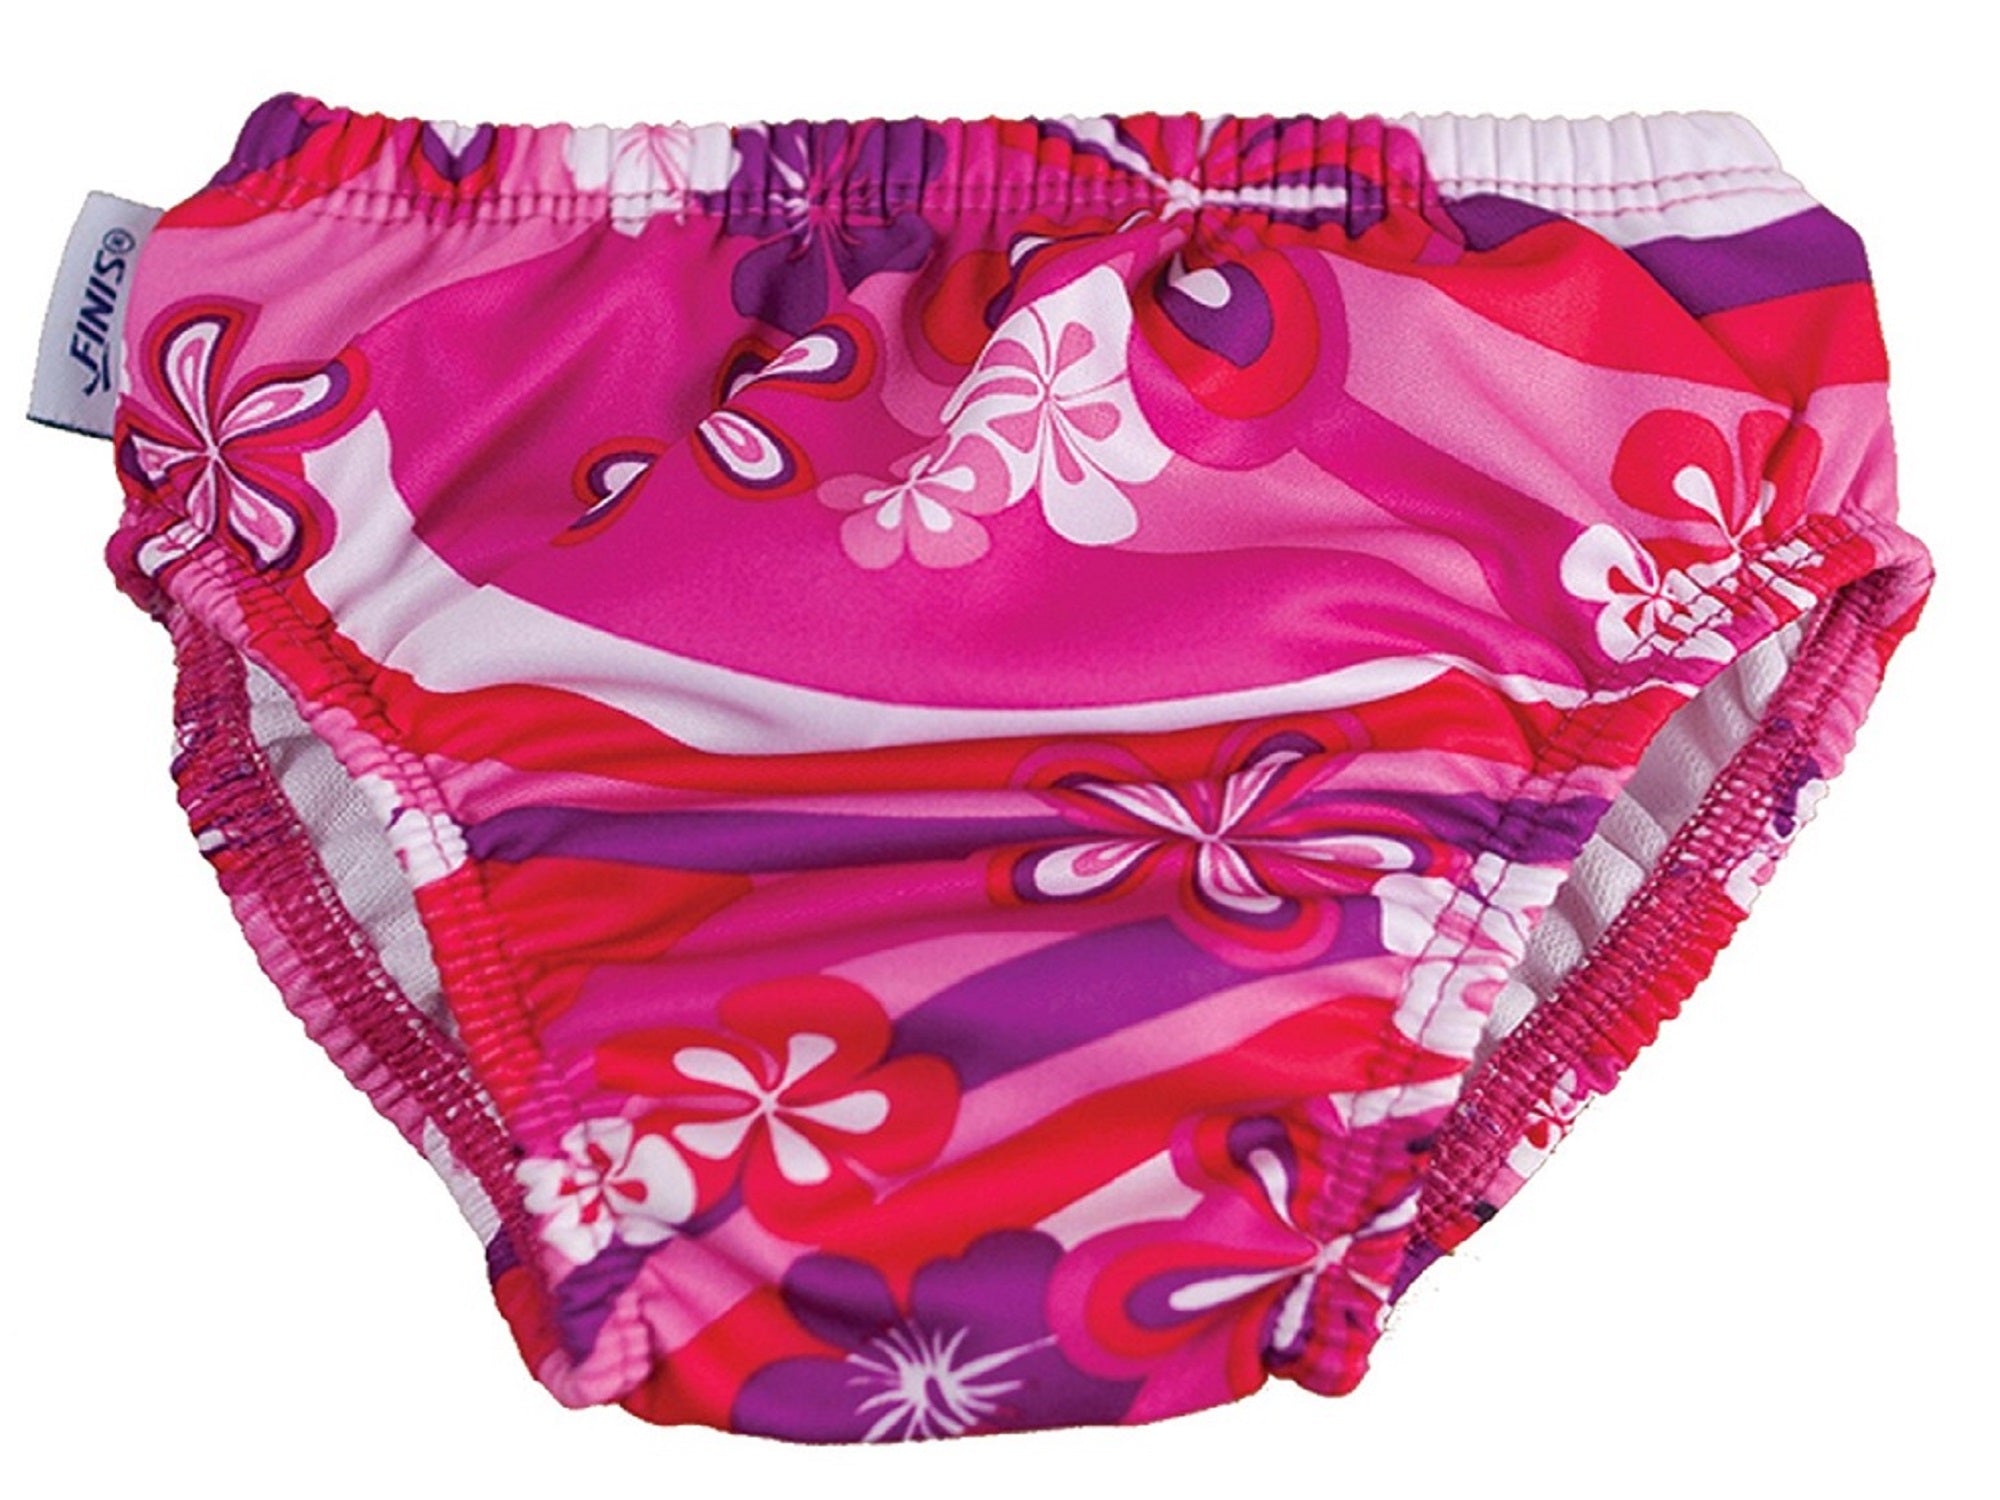 FINIS Flower Power Pink Reusable Swim Diaper, X-Large (18-24 Months)